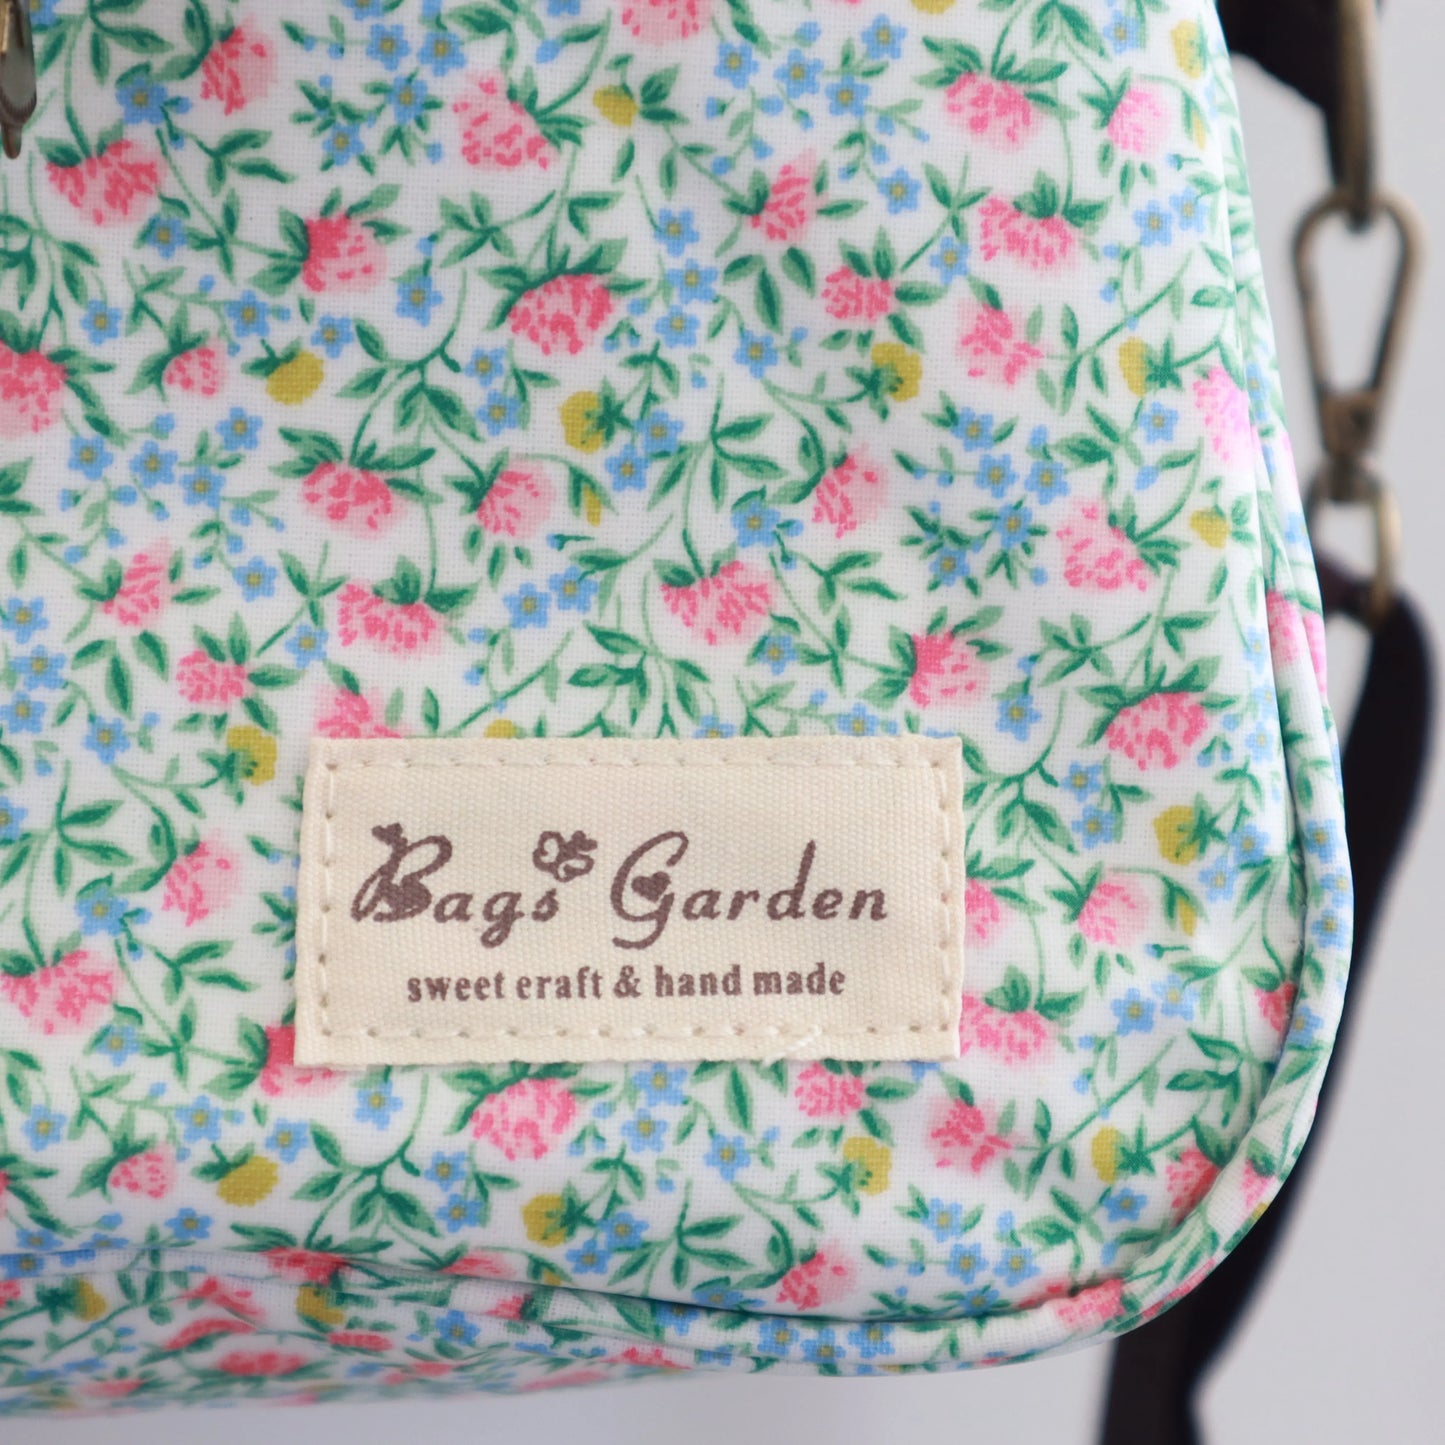 Bags Garden bolso de mano Neverita waterproof Albahaca Bags Garden Bags Garden